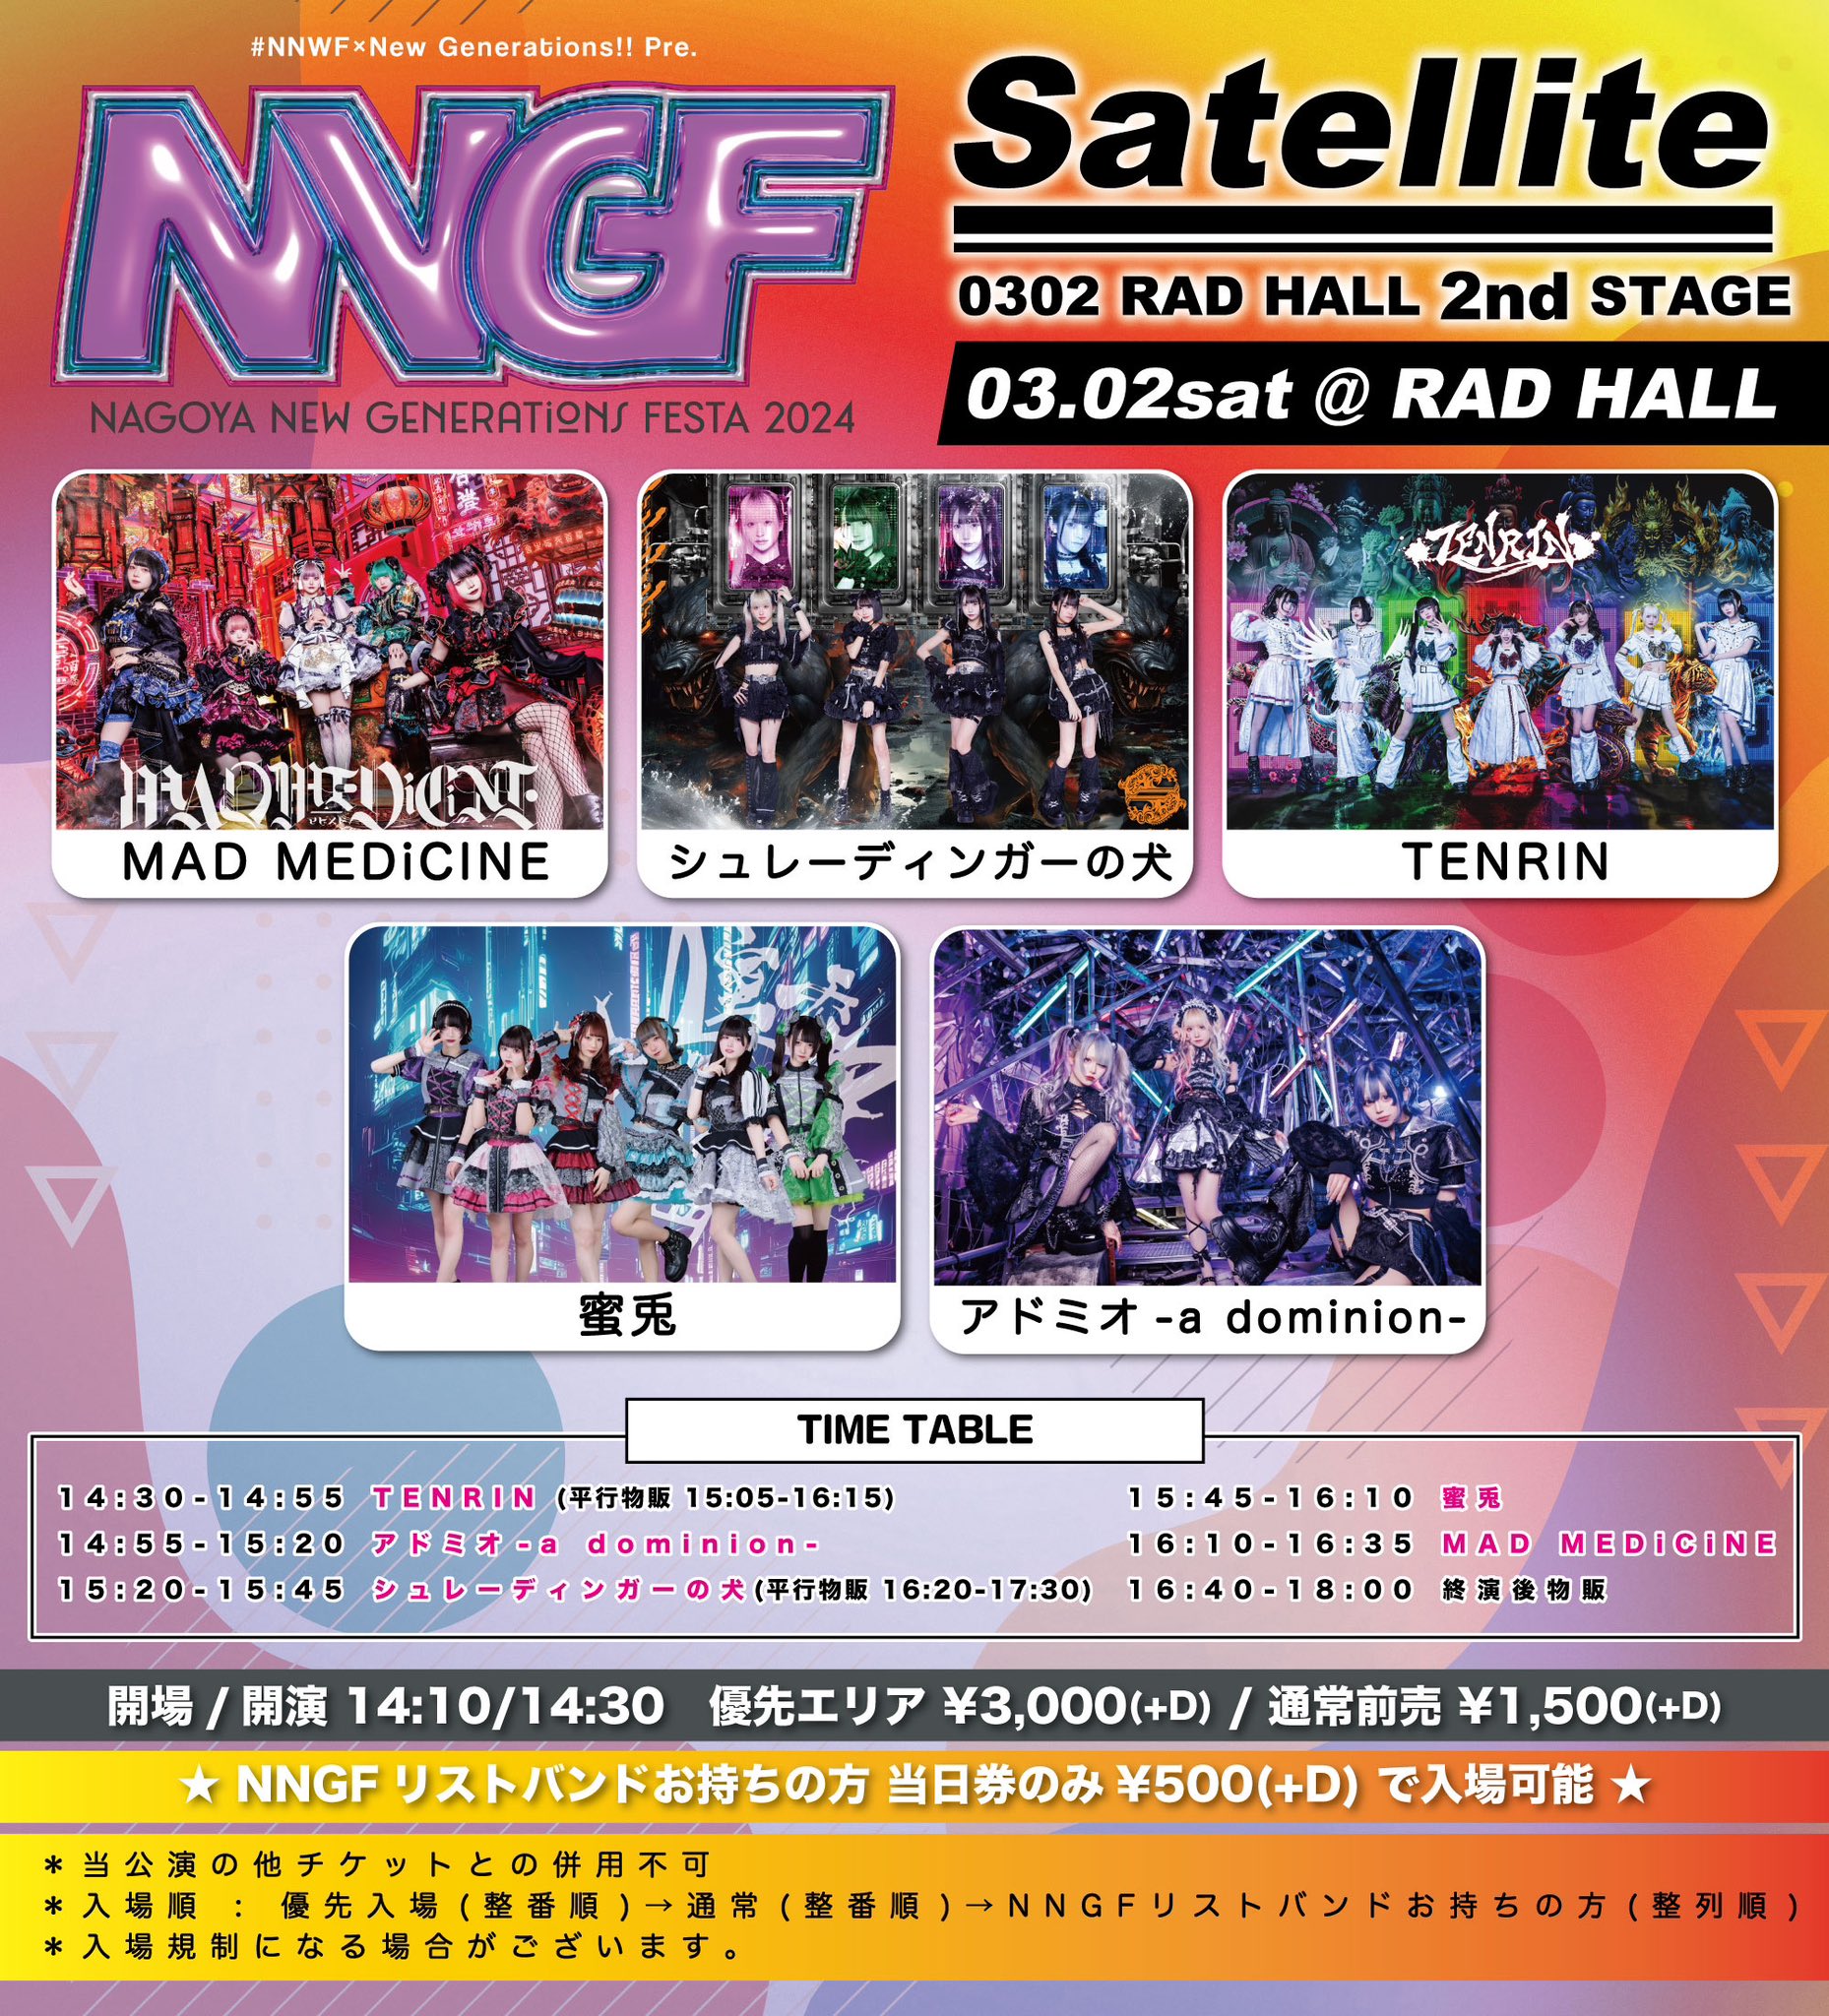 NNGF Satellite 2nd STAGE